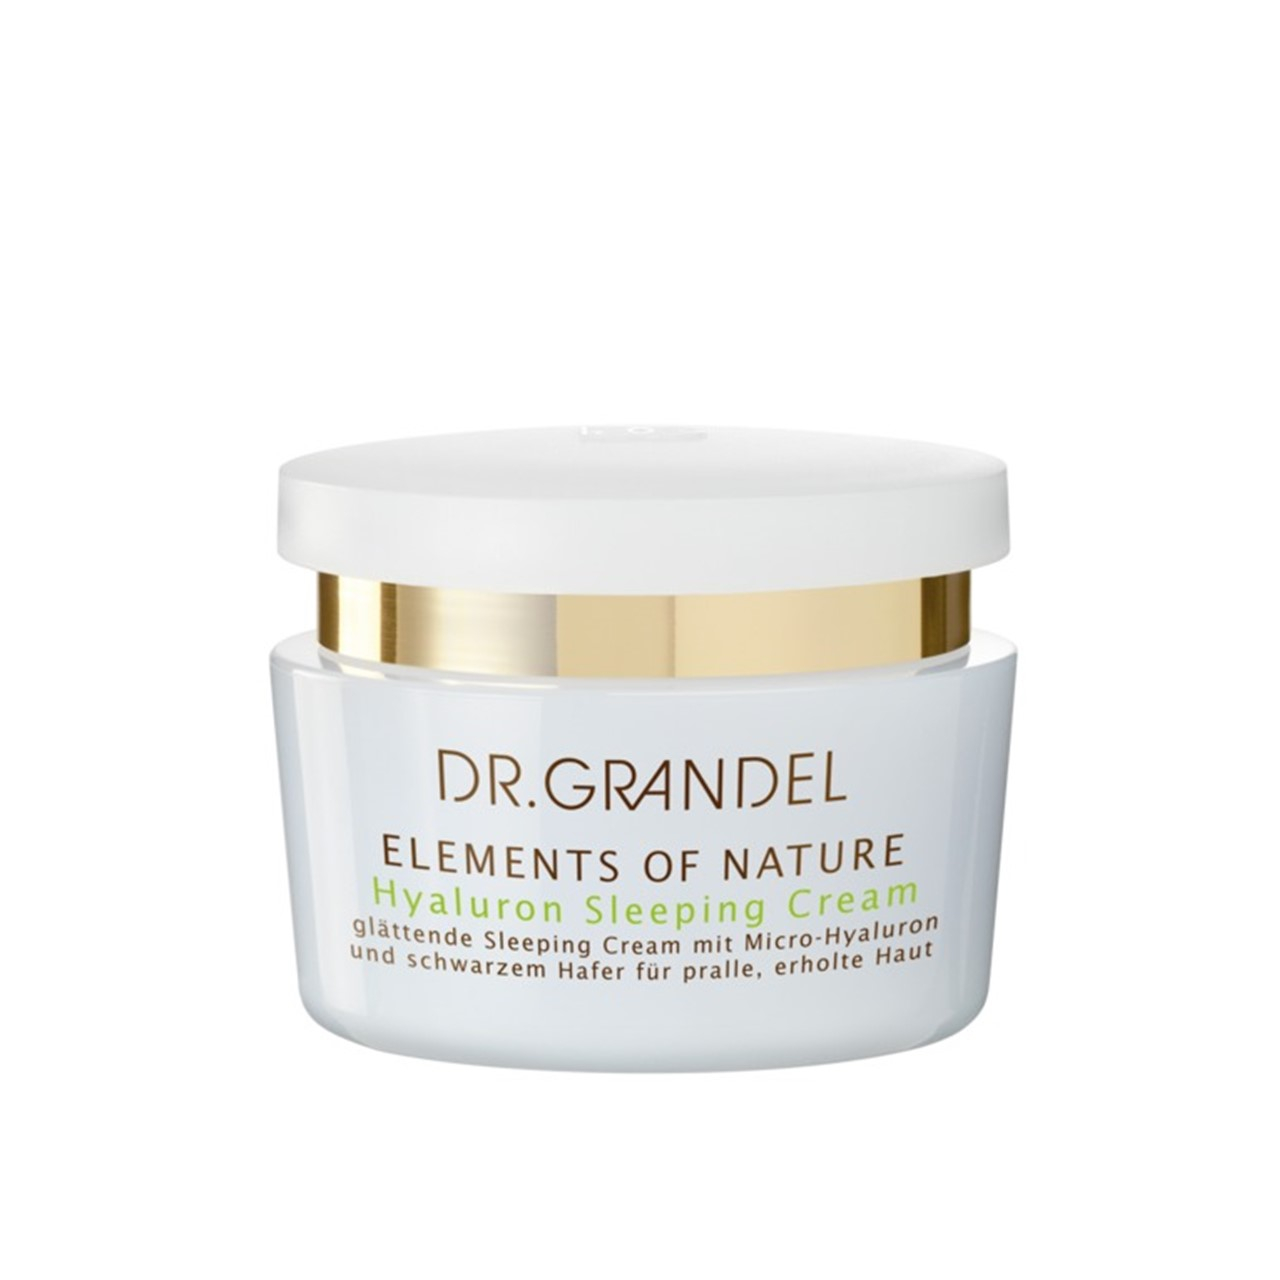 DR. GRANDEL Elements Of Nature Hyaluron Sleeping Cream 50ml (1.69fl oz)